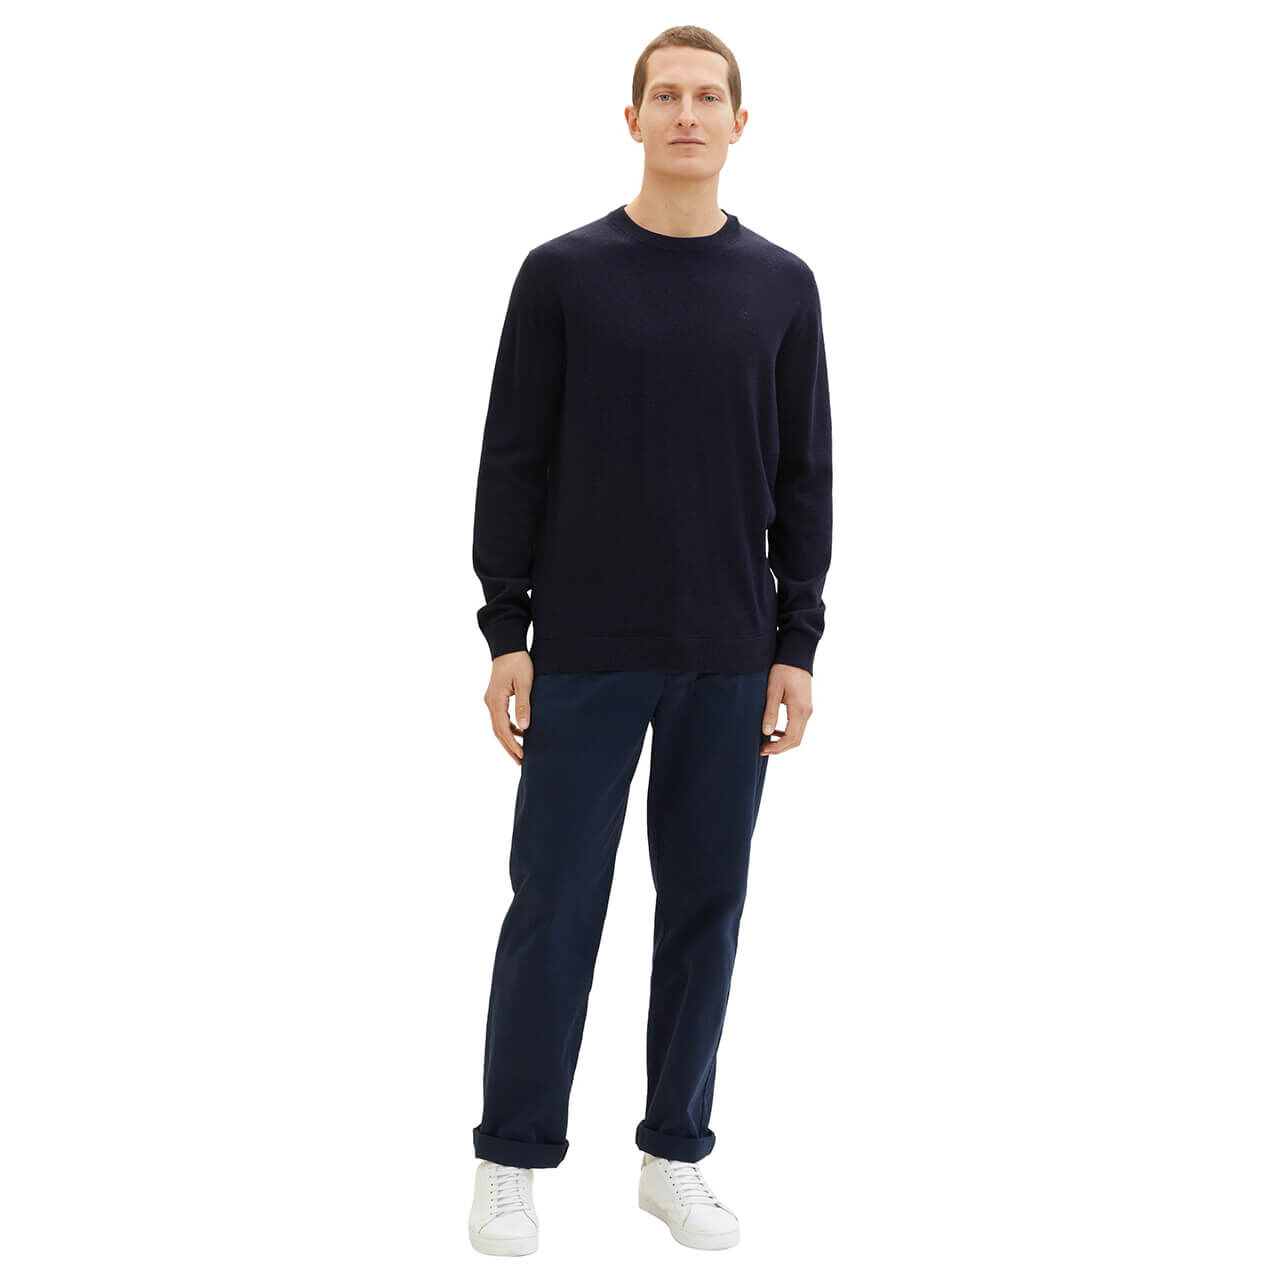 Tom Tailor Herren Pullover Basic Crewneck knitted navy melange compact cotton